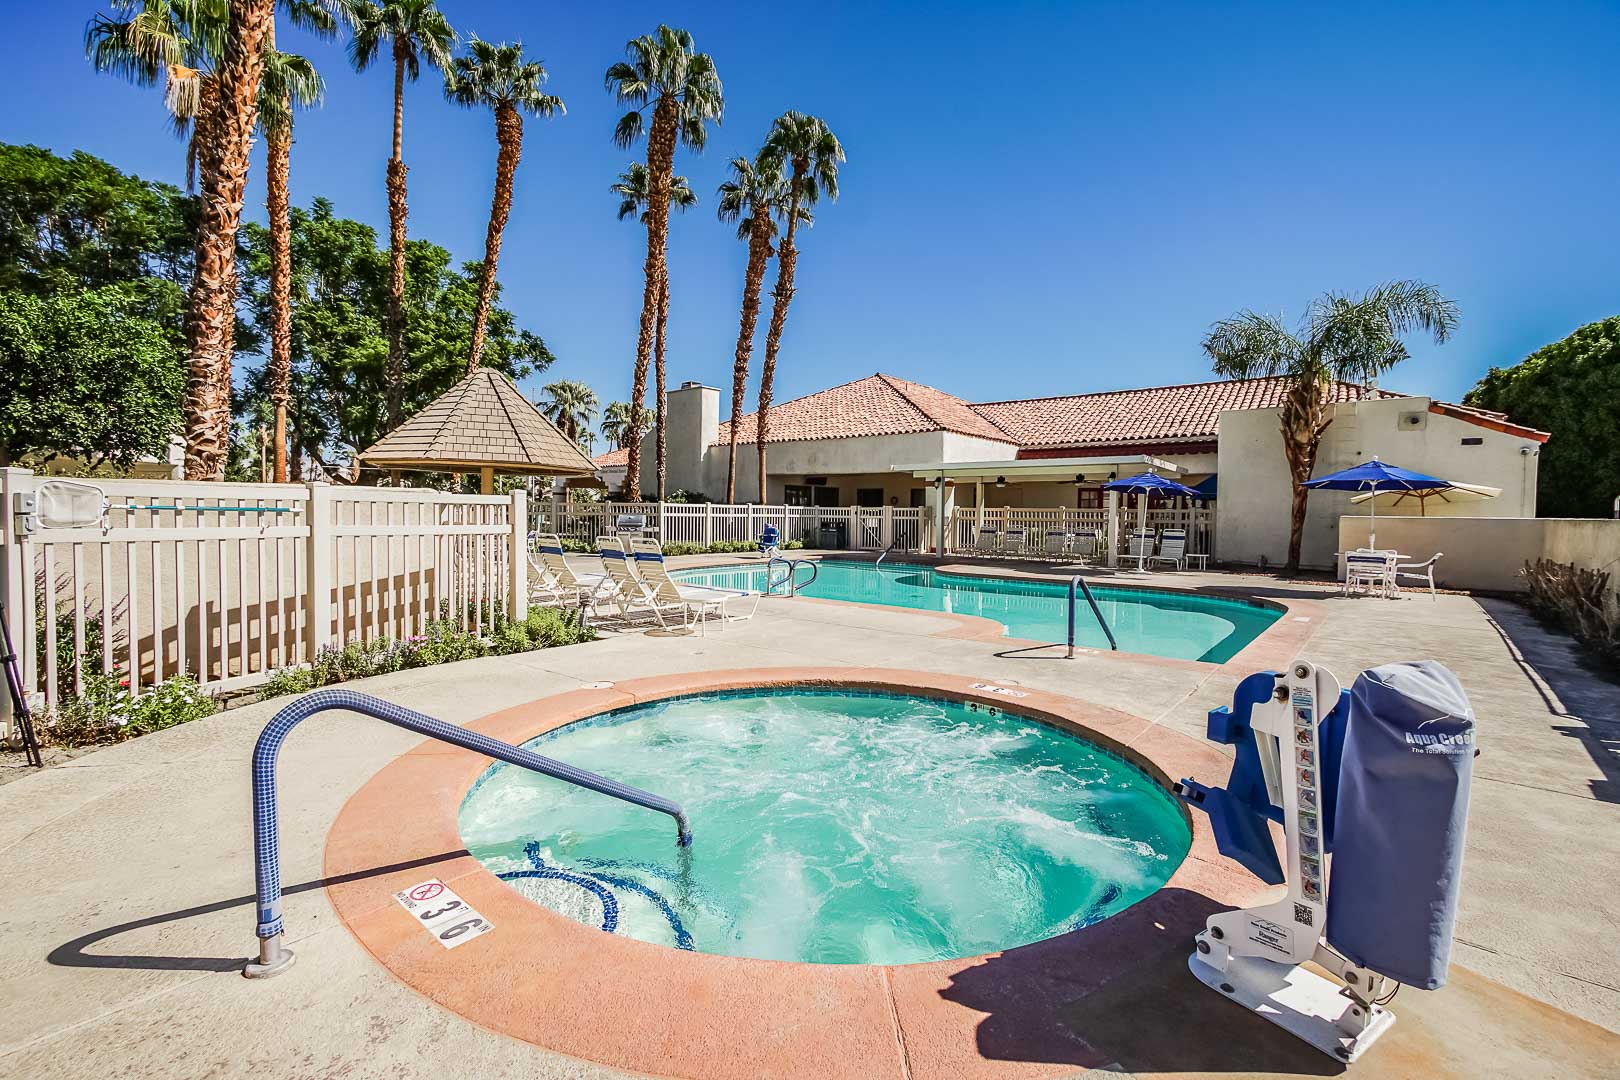 A pristine Pool and jacuzzi area at VRI Americas' Desert Breezes Resort in California